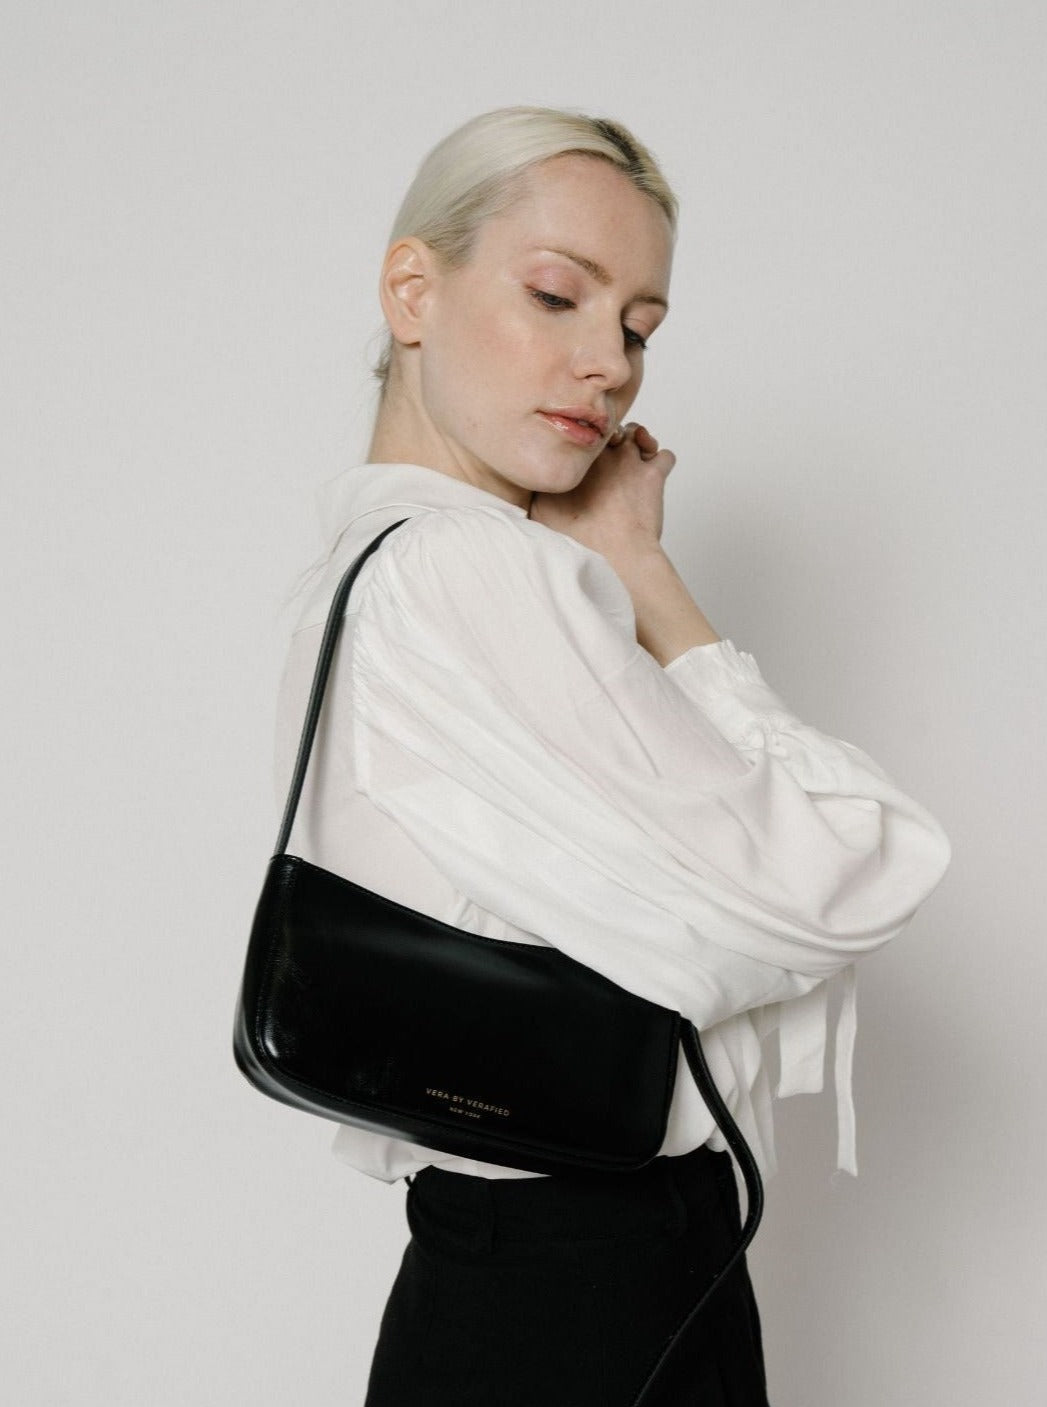 Pu Leather Plain Glamour Handbags